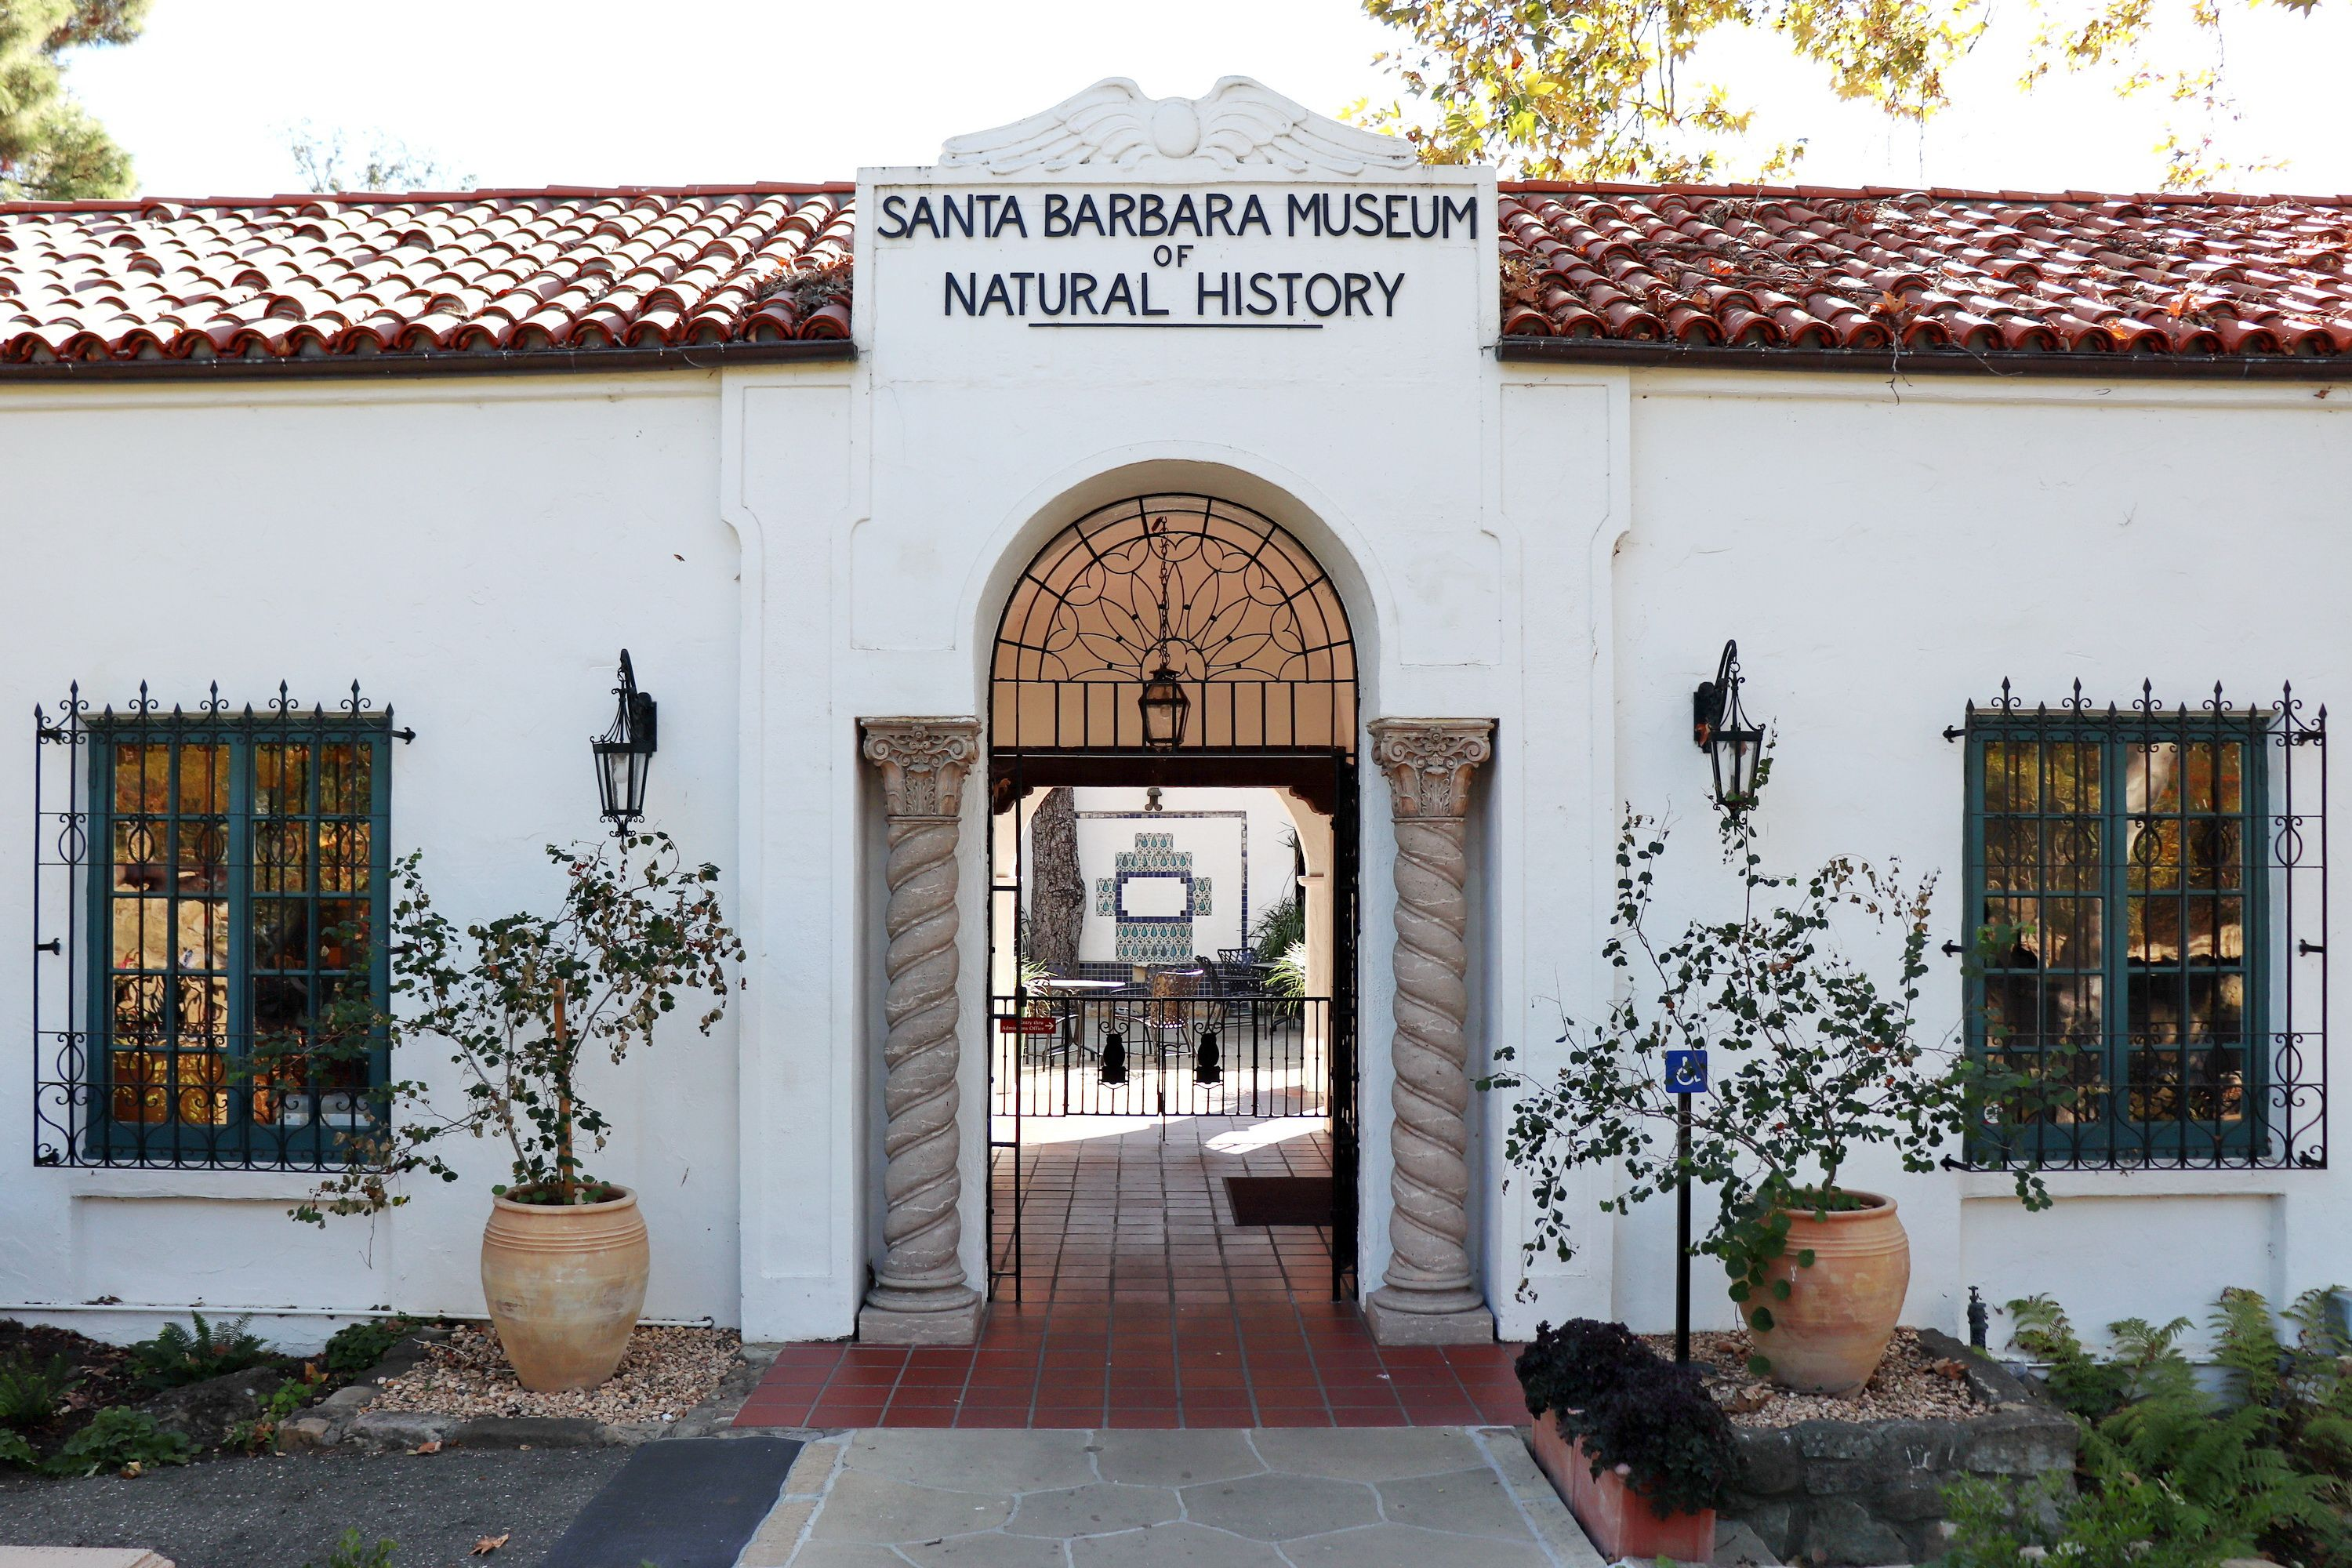 The front of the Santa Barbara Museum of Natural History.